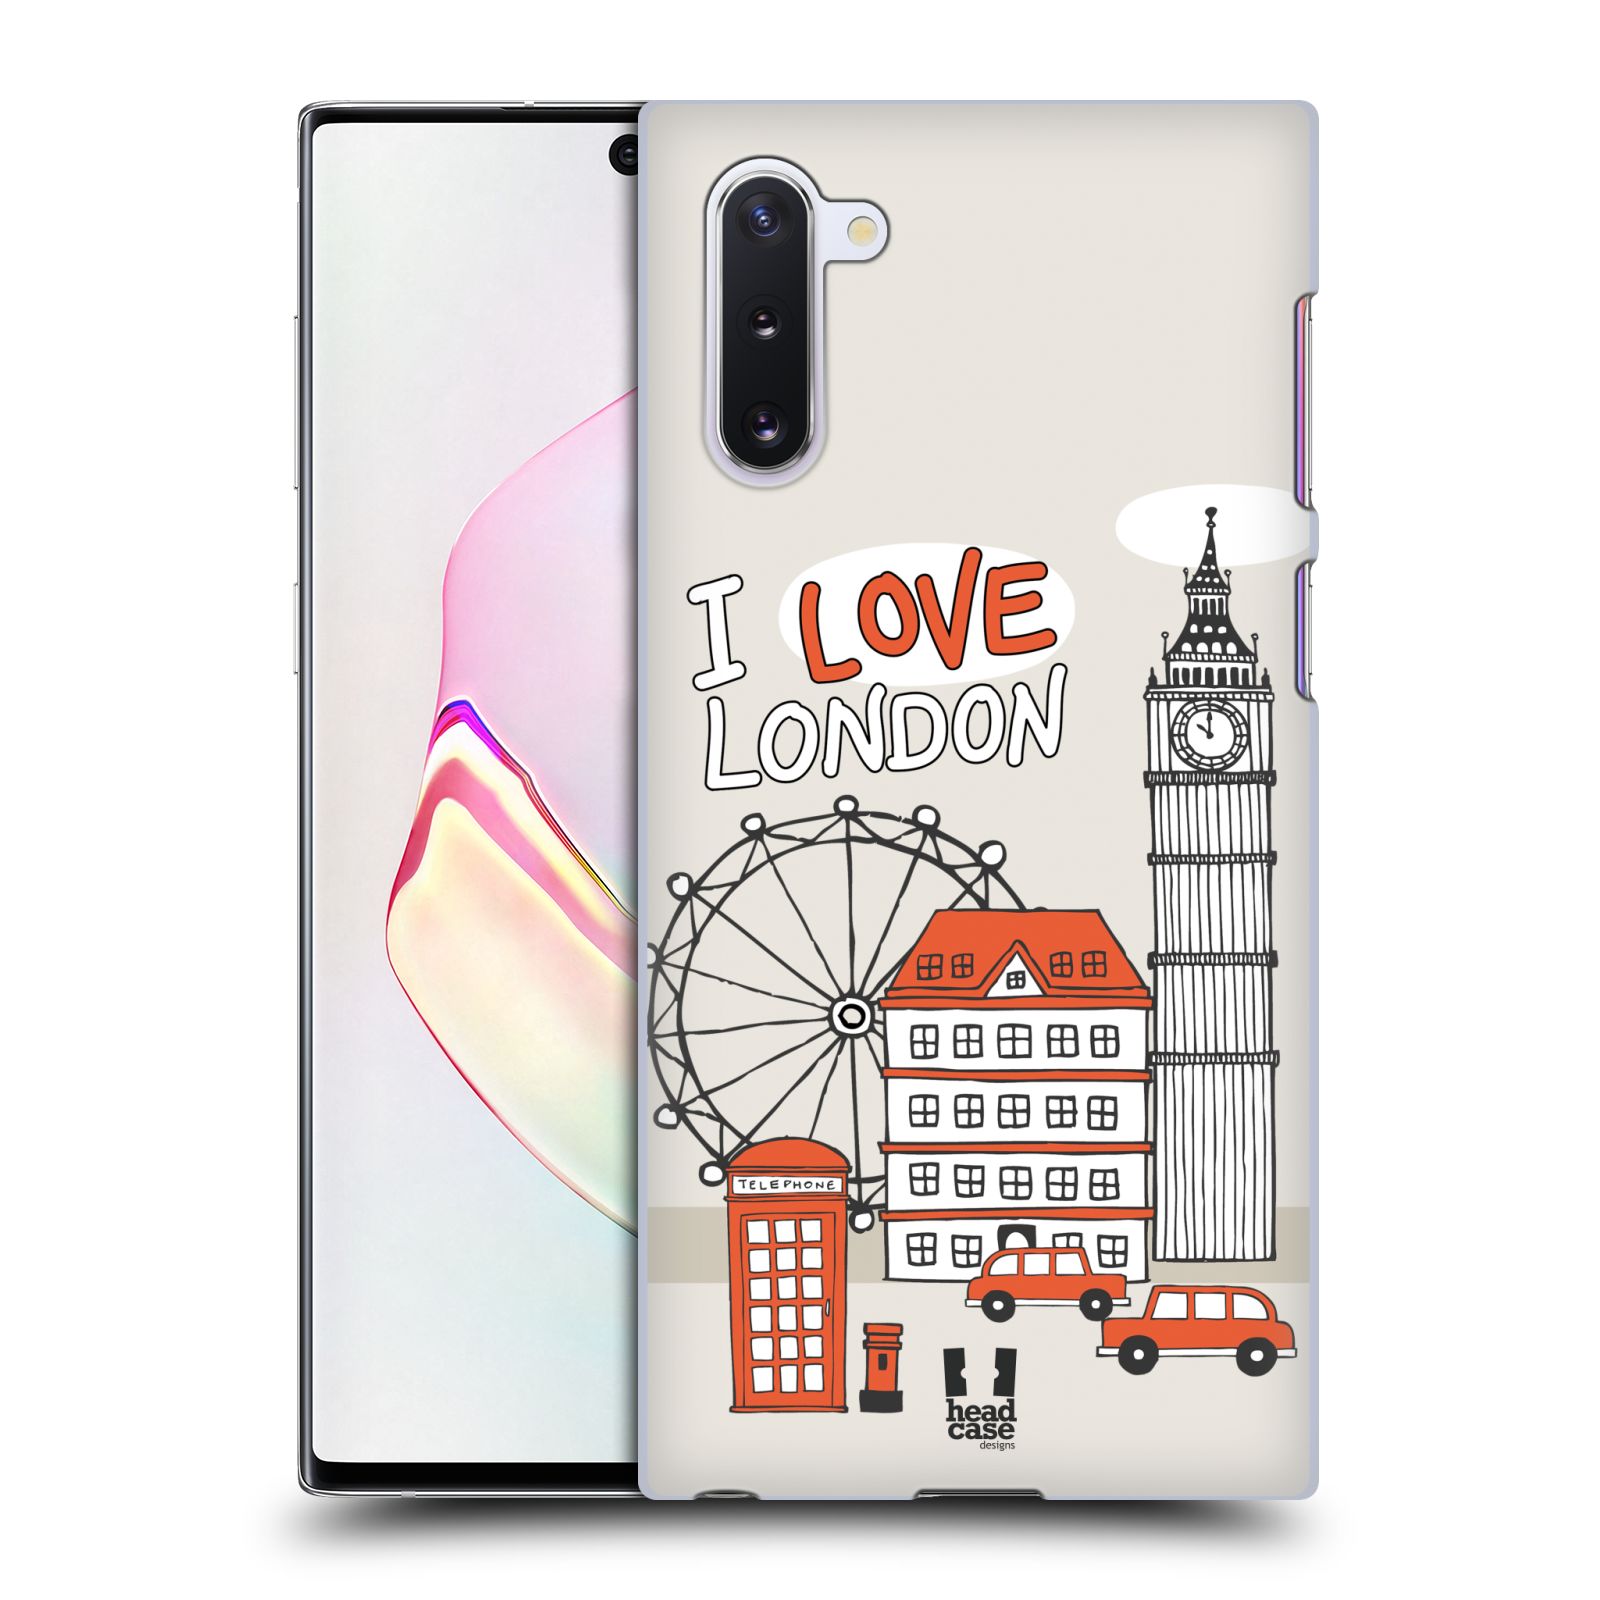 Pouzdro na mobil Samsung Galaxy Note 10 - HEAD CASE - vzor Kreslená městečka ČERVENÁ, Anglie, Londýn, I LOVE LONDON